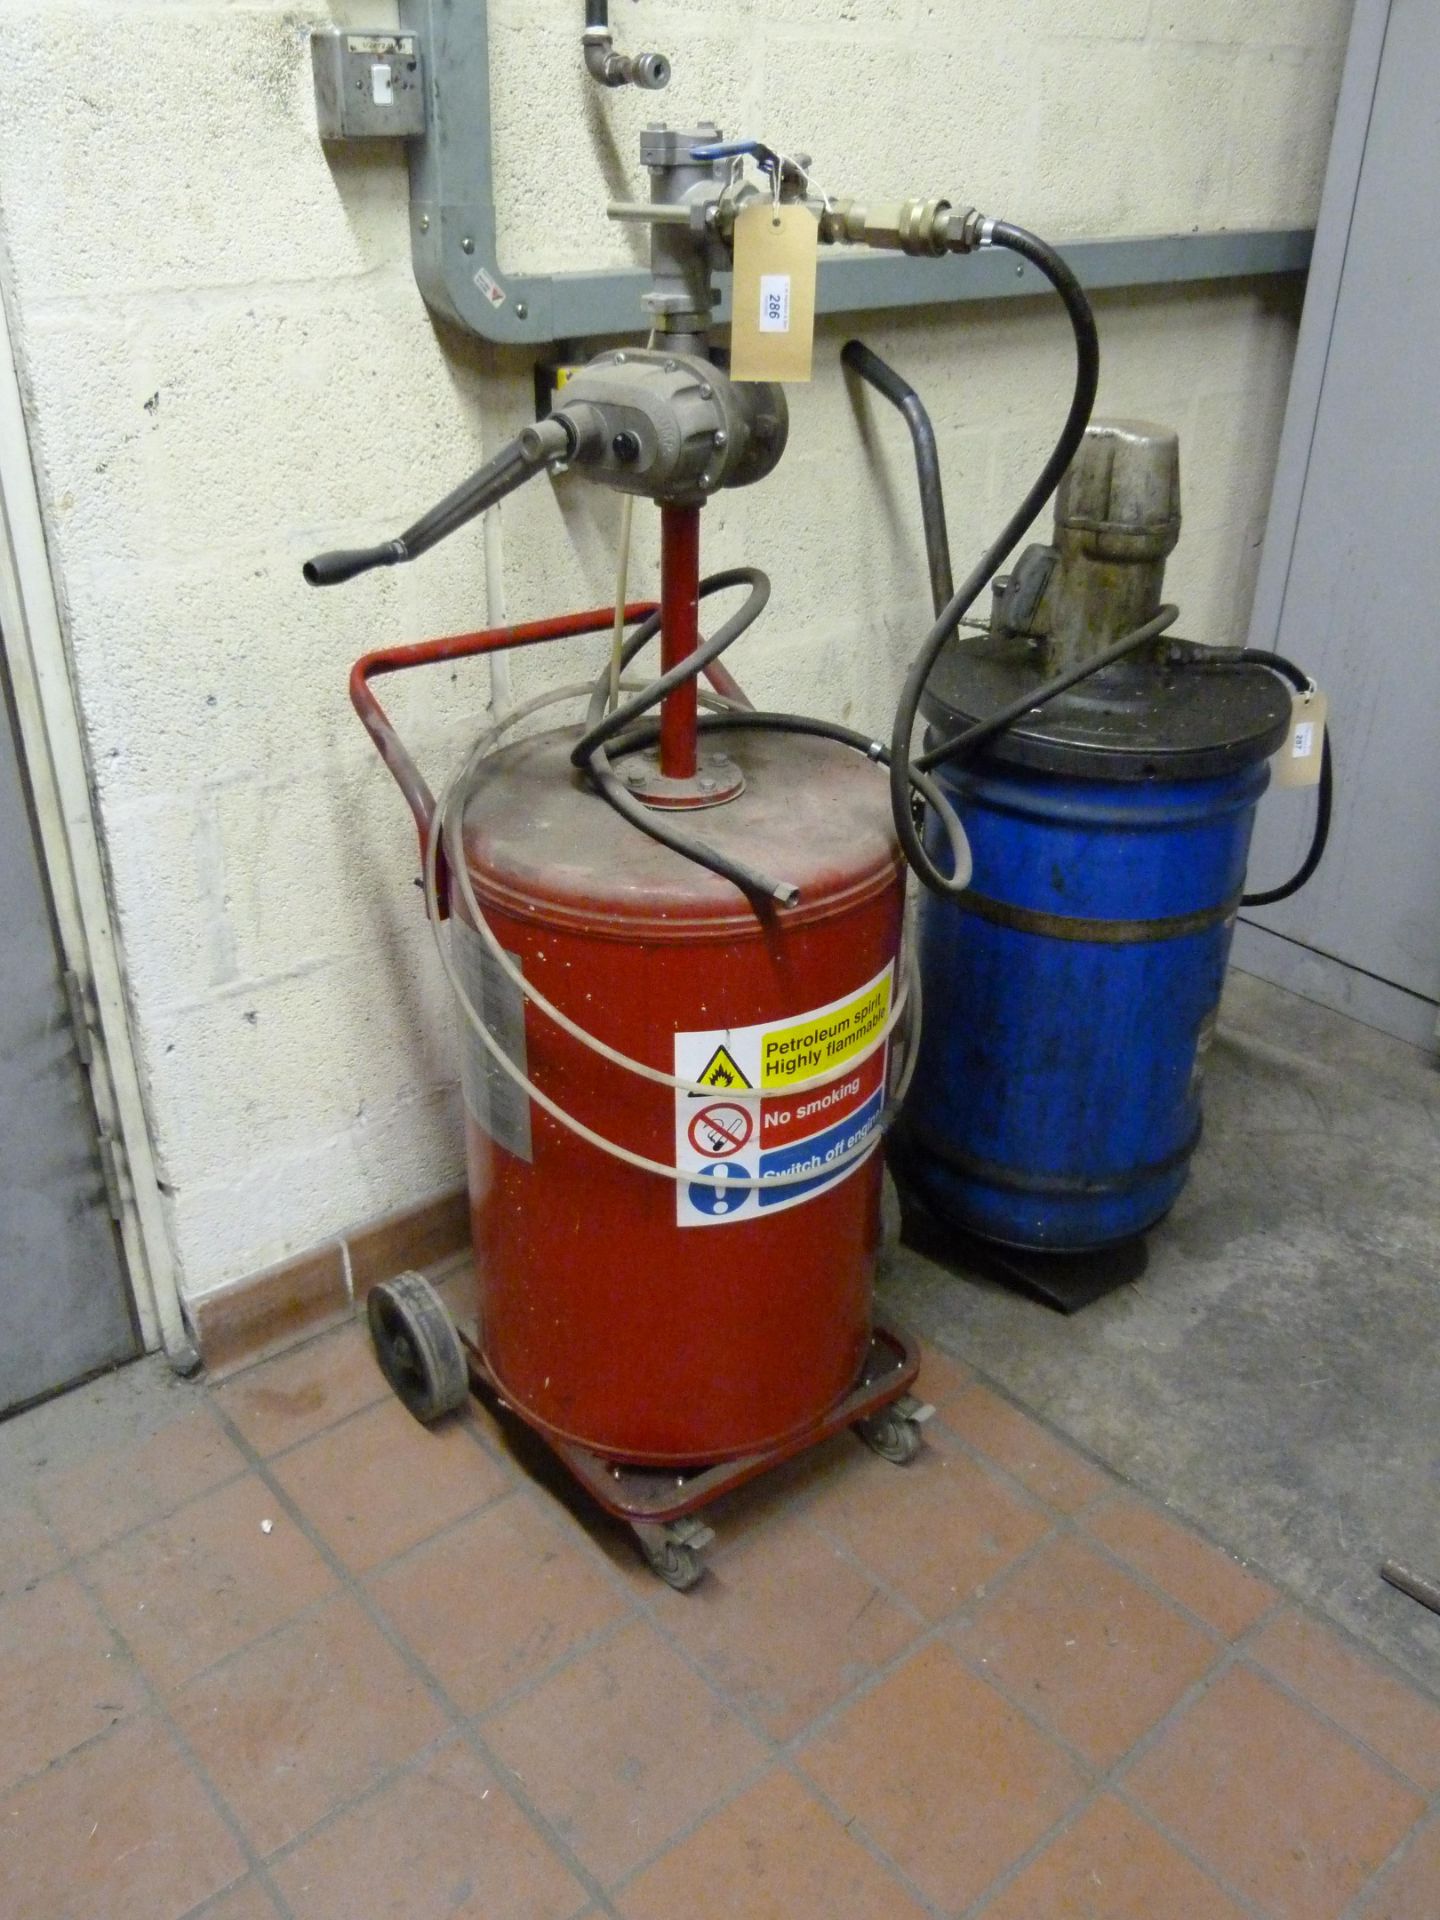 A mobile hand pump petroleum spirit dispenser